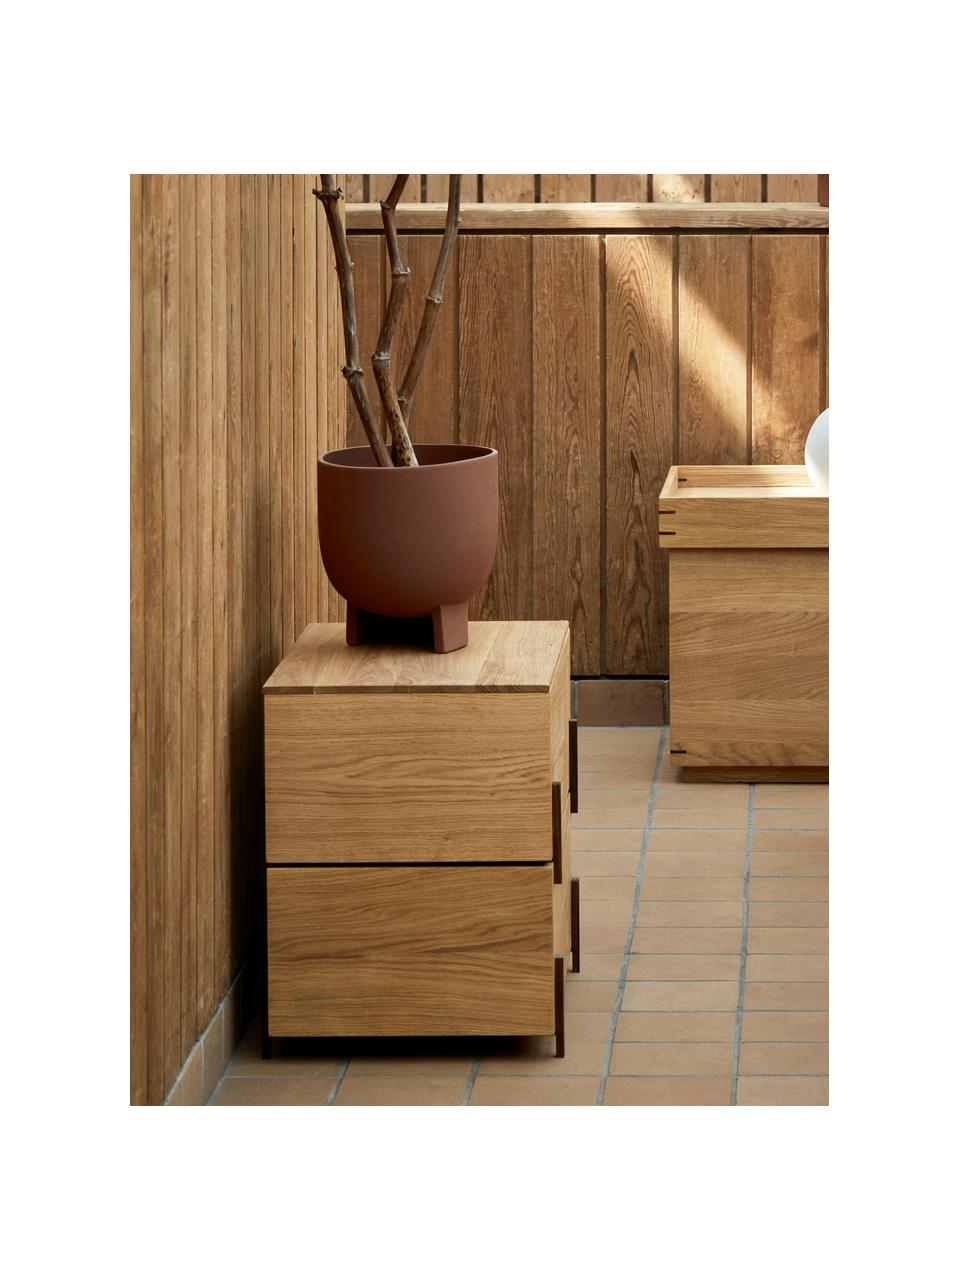 Regál z dubového dreva Stack, Dubové drevo, s FSC certifikátom, Dubové drevo, ošetrené olejom, Š 50 x V 68 cm